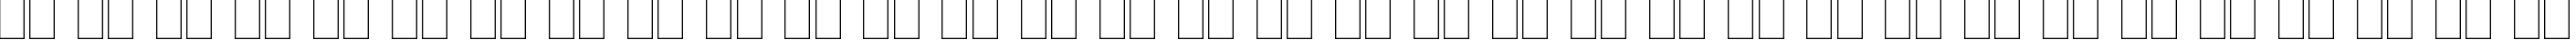 Пример написания русского алфавита шрифтом Cupertino Italic:001.003